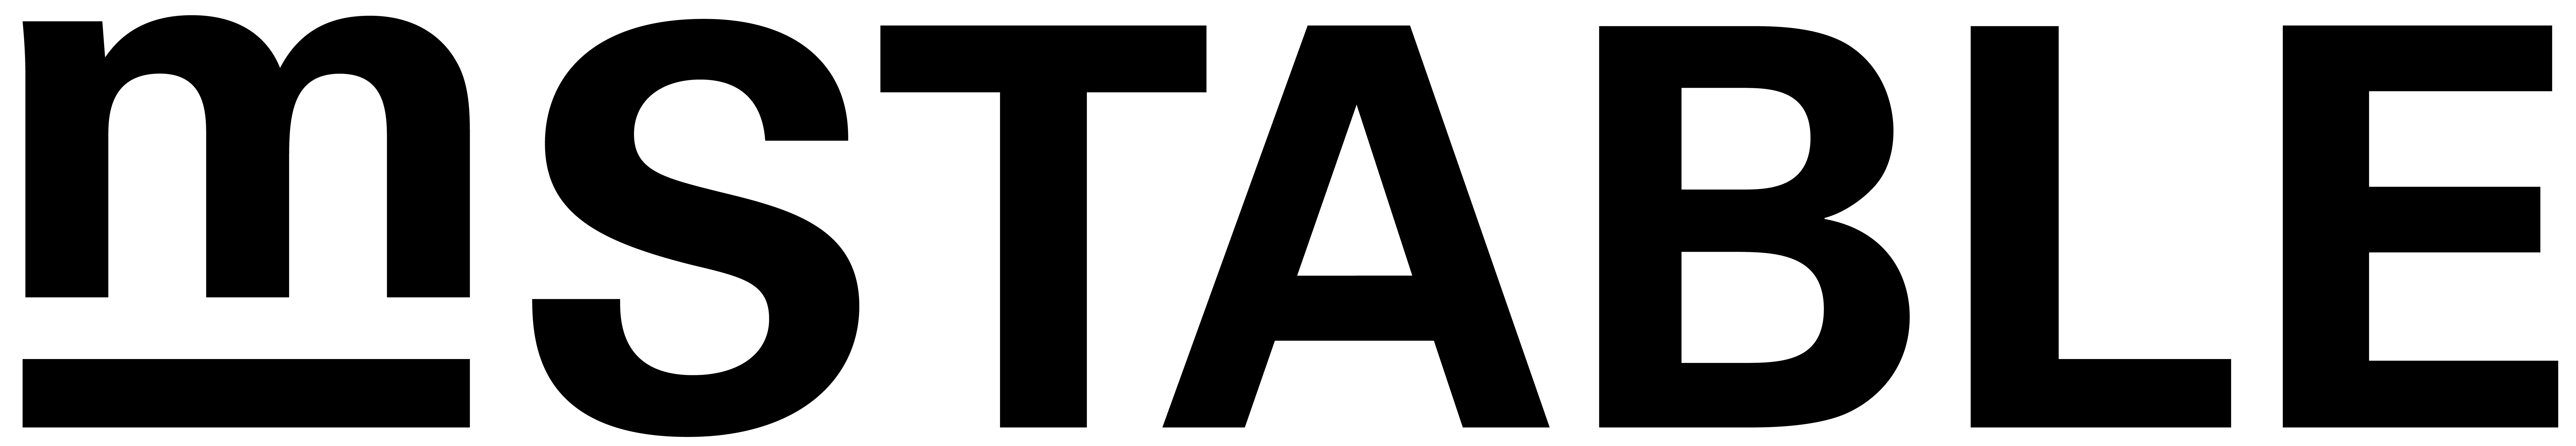 mStable Logo